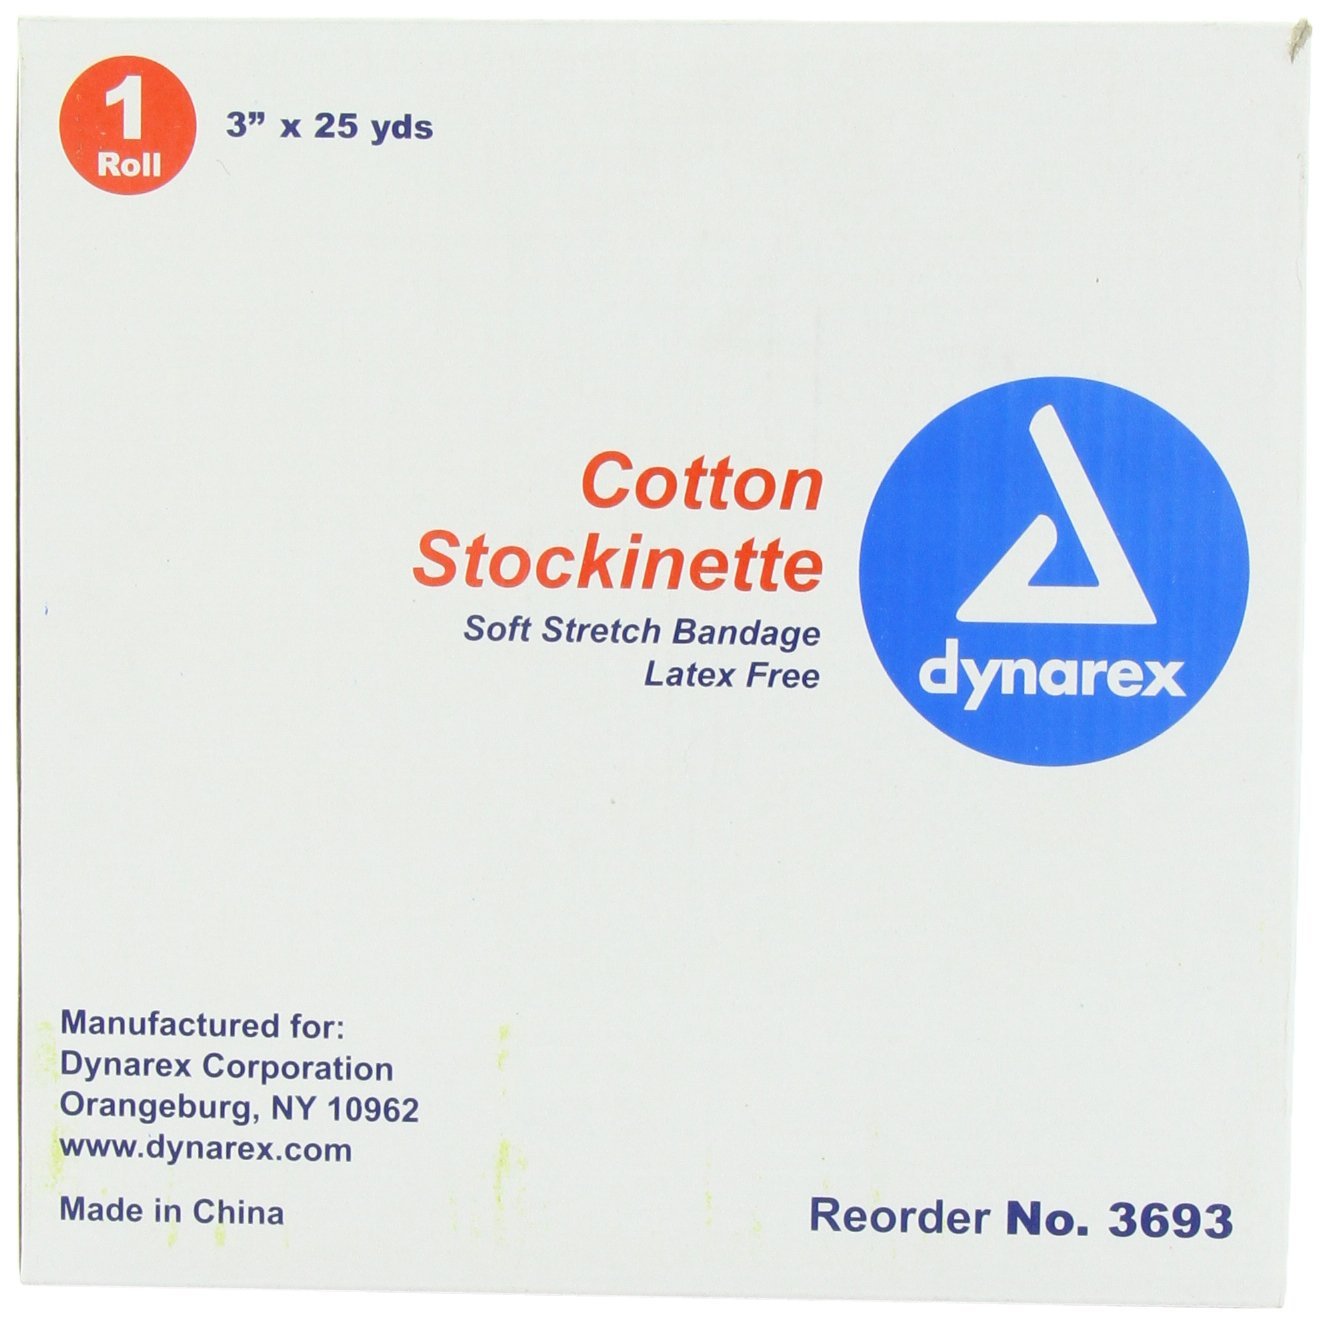 Dynarex Cotton Stockinette Soft Stretch Bandage - image 2 of 3